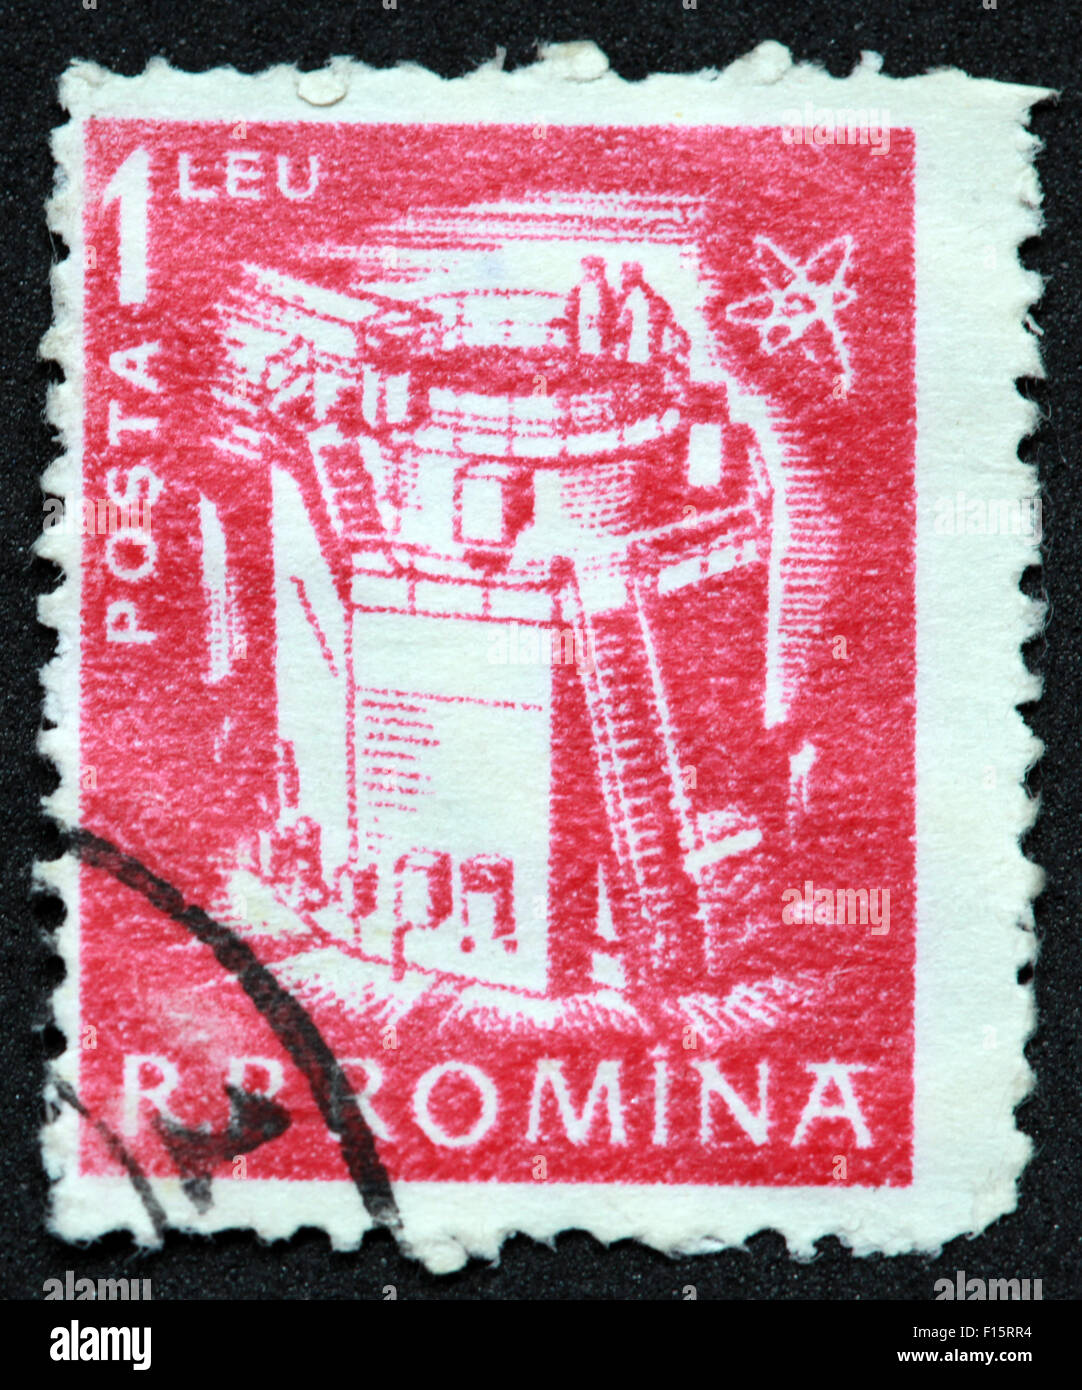 RP Romina via 1leu Posta francobollo rosso Foto Stock